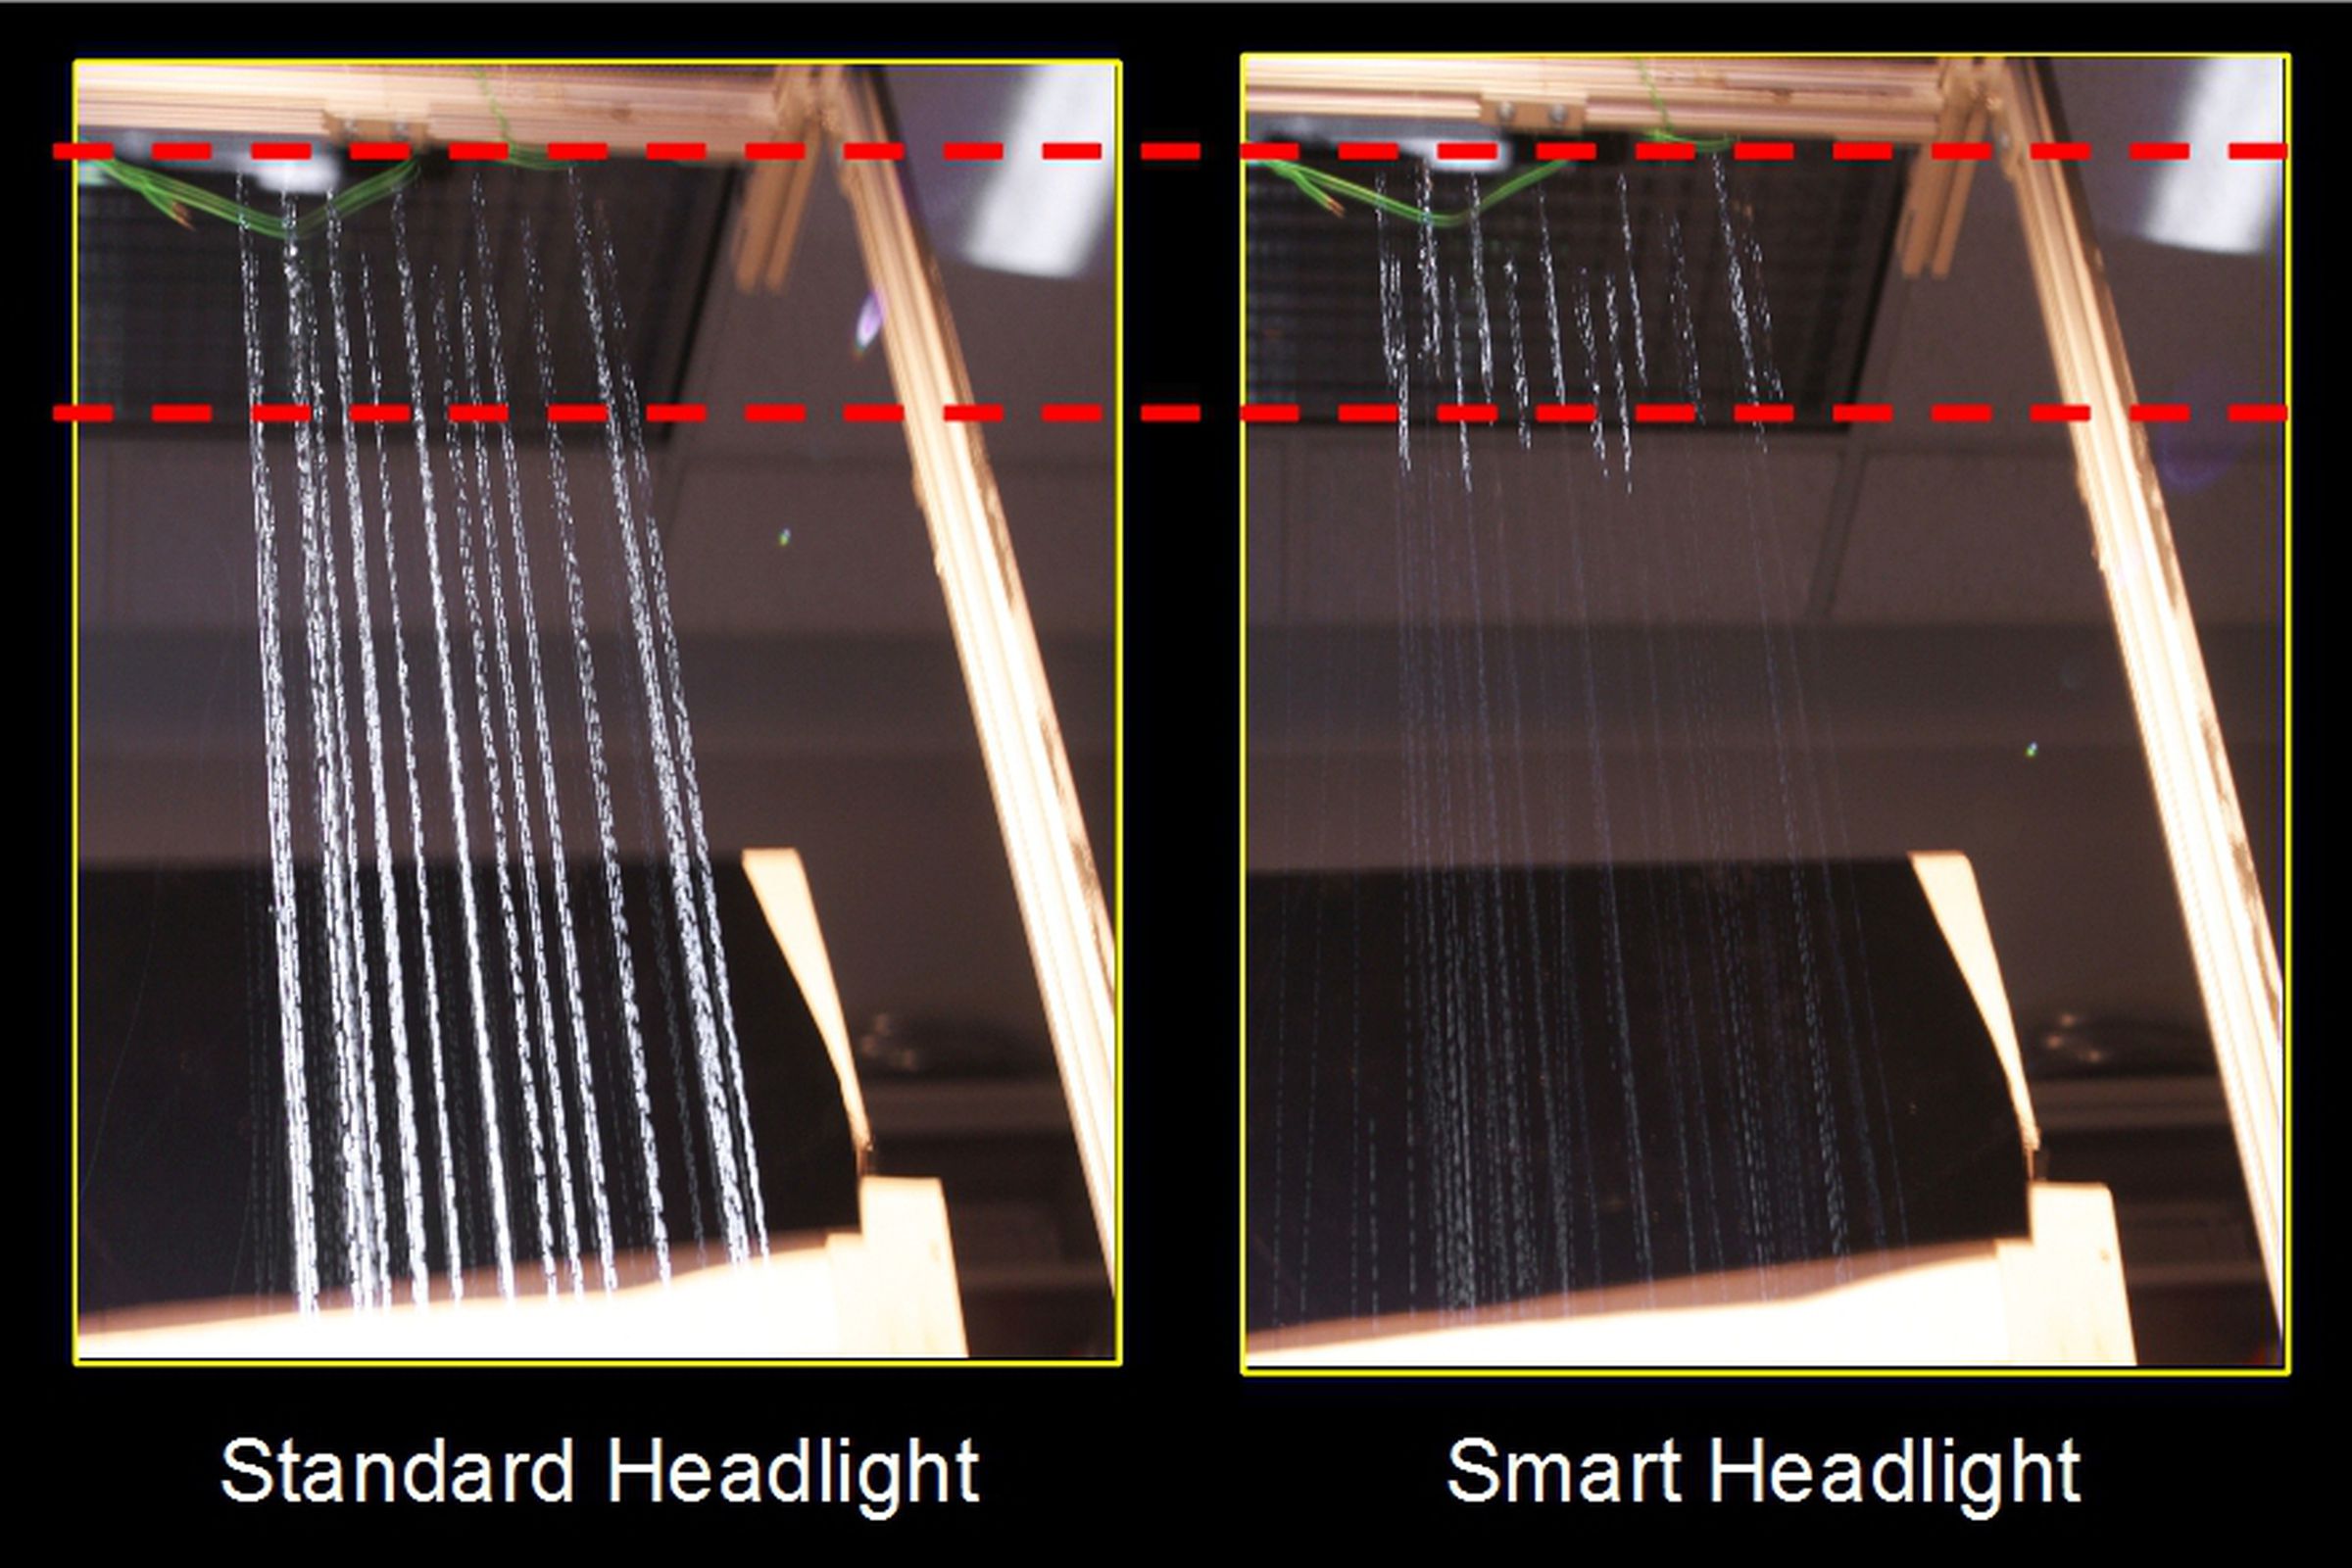 Carnegie Mellon smart headlight